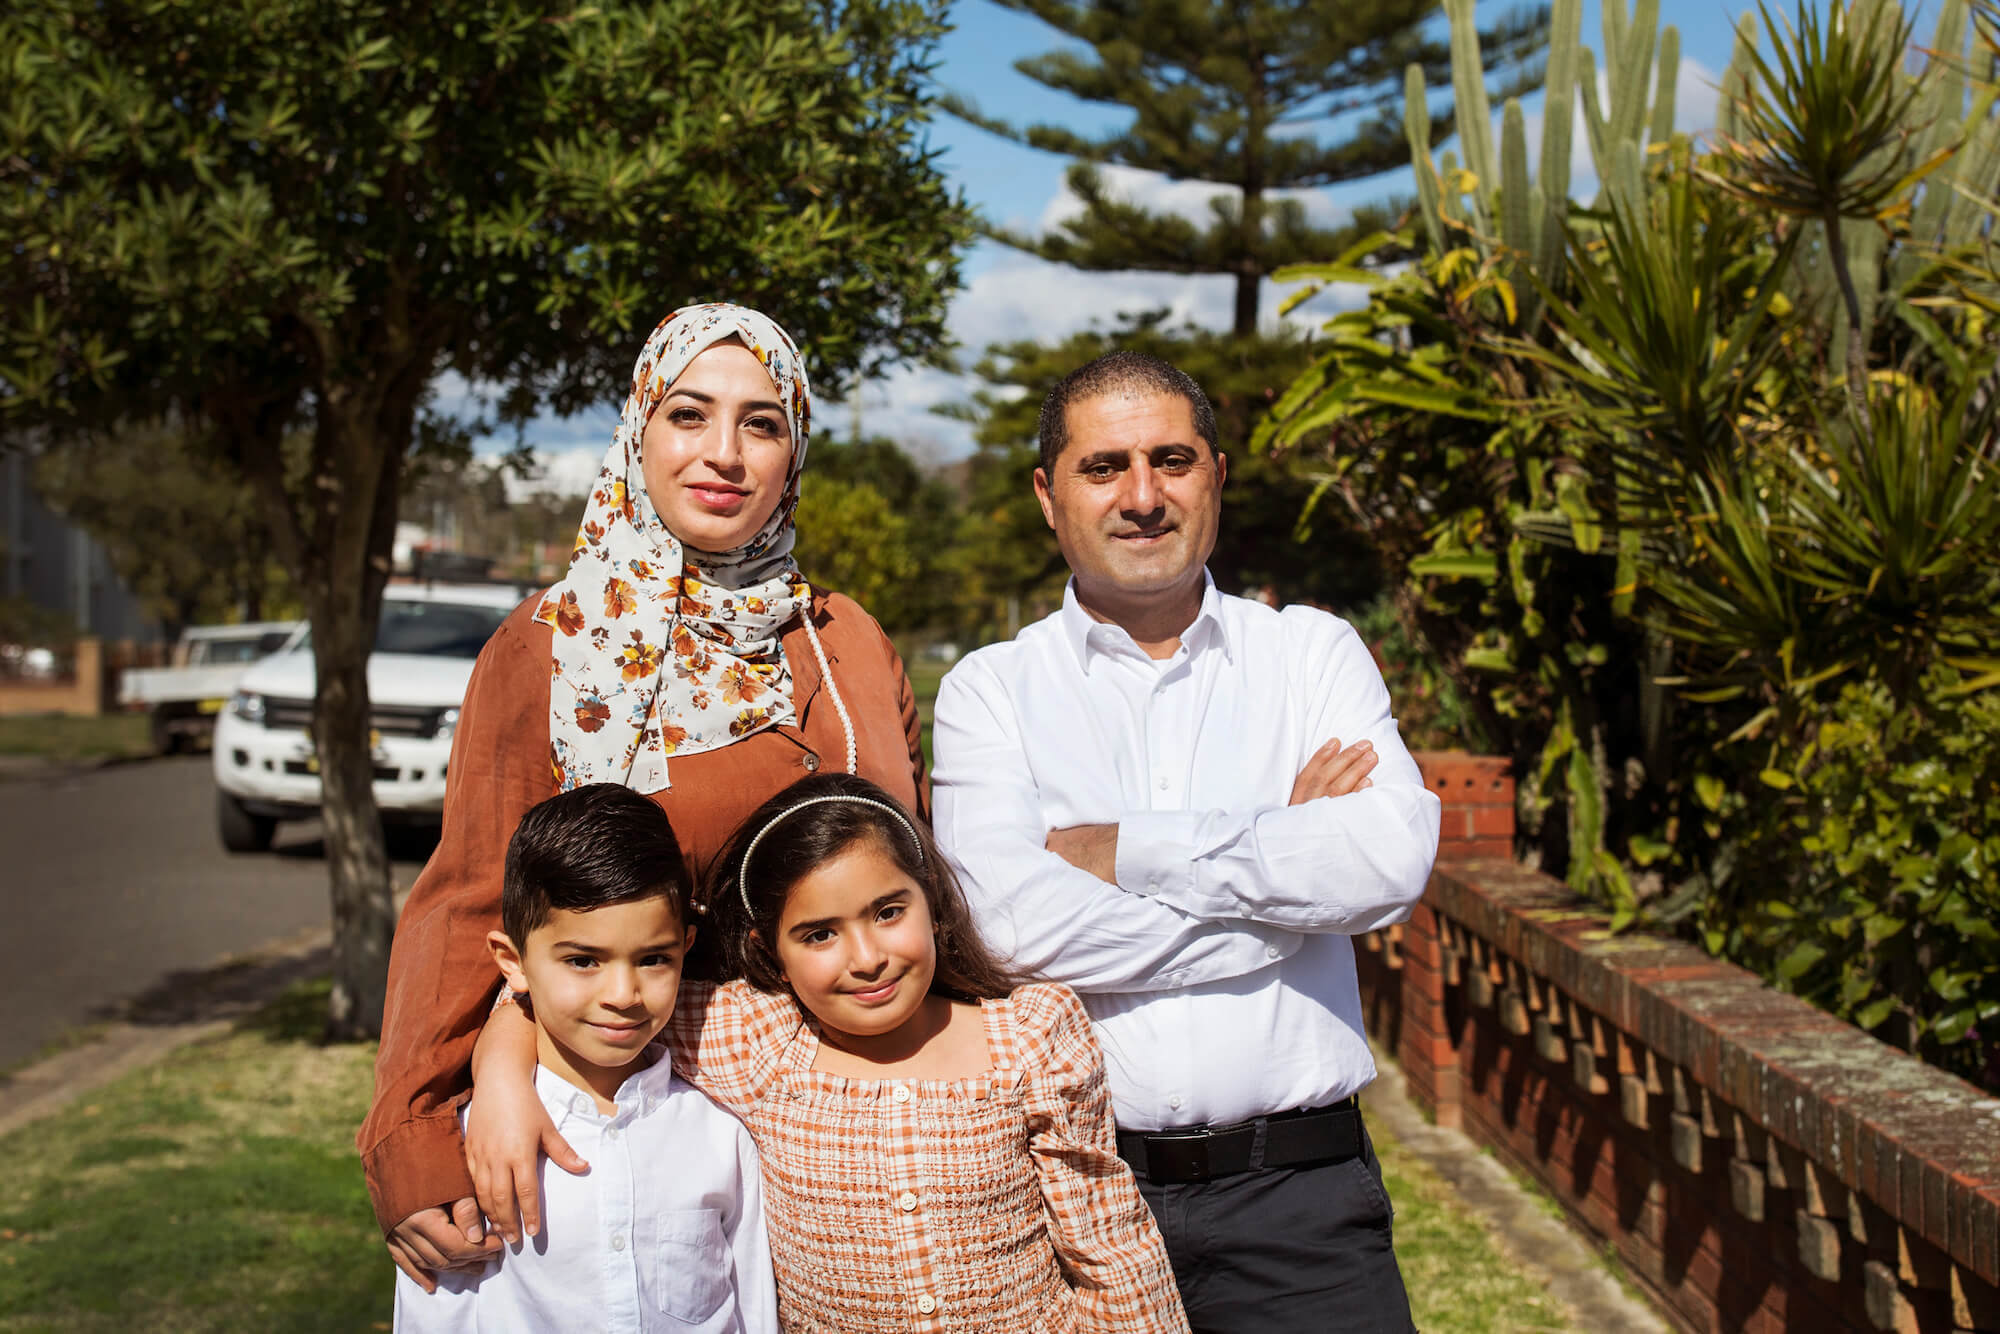 Family from the Western Sydney region